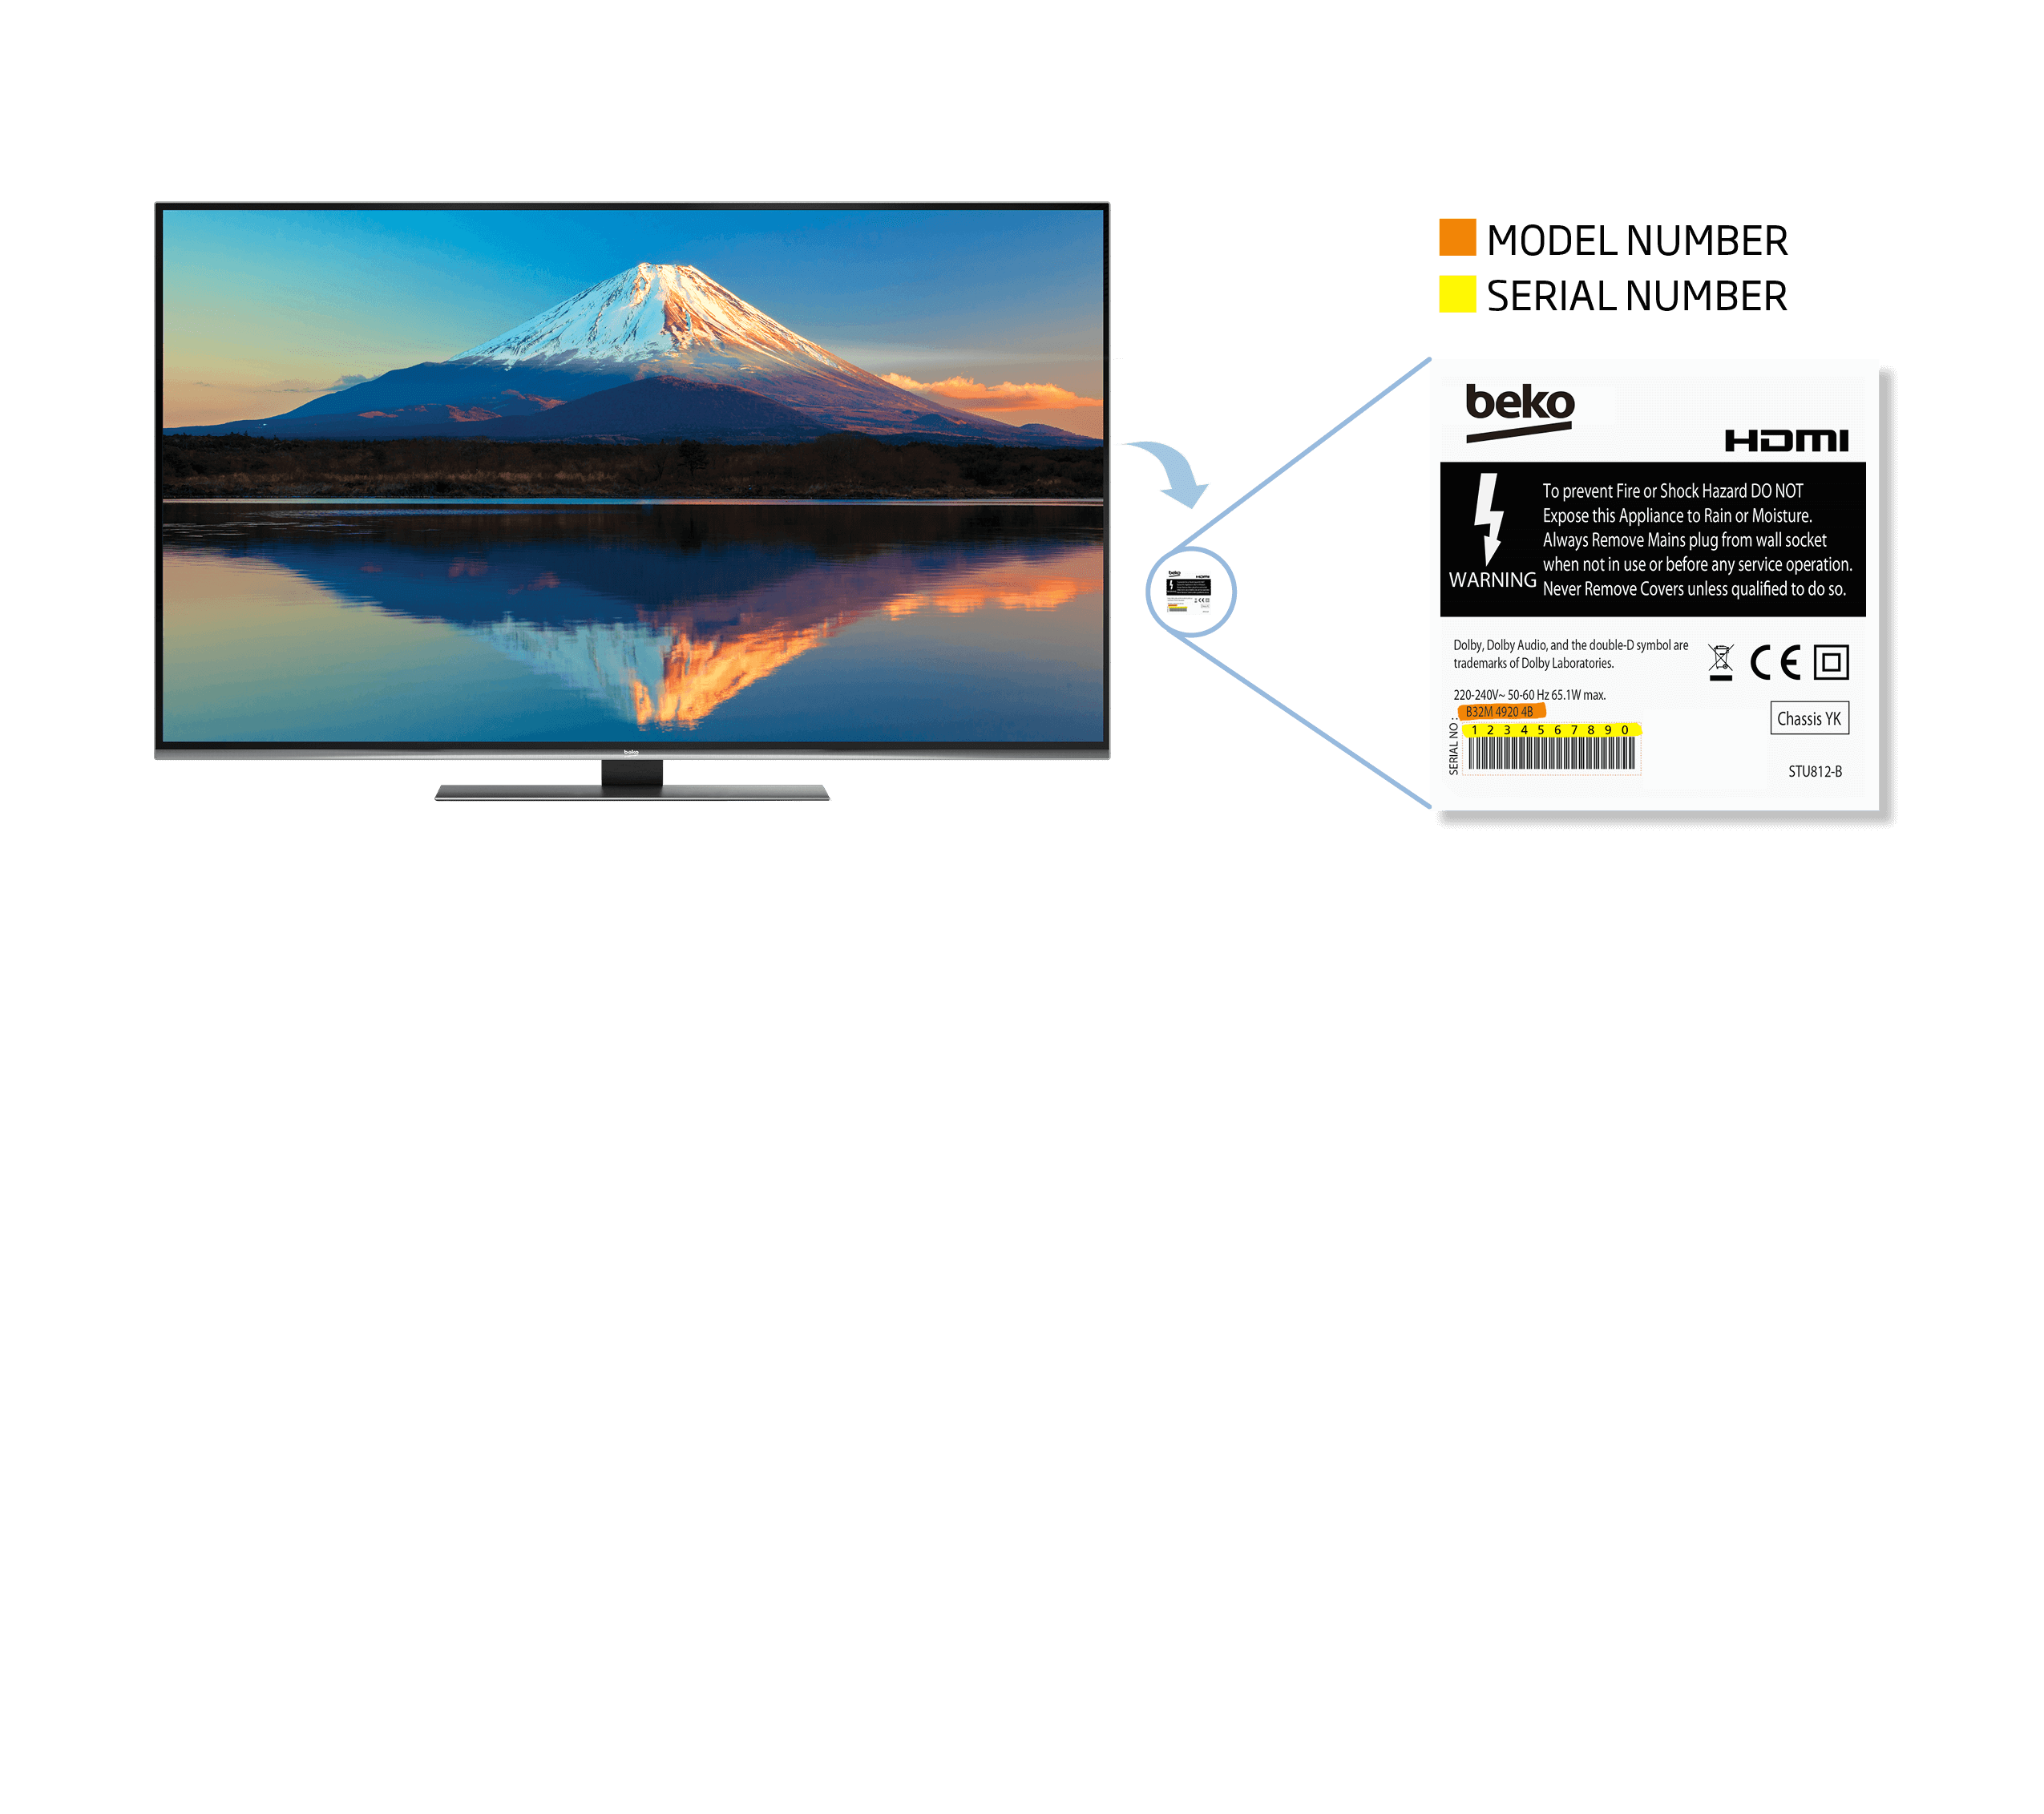 Numer modelu telewizora